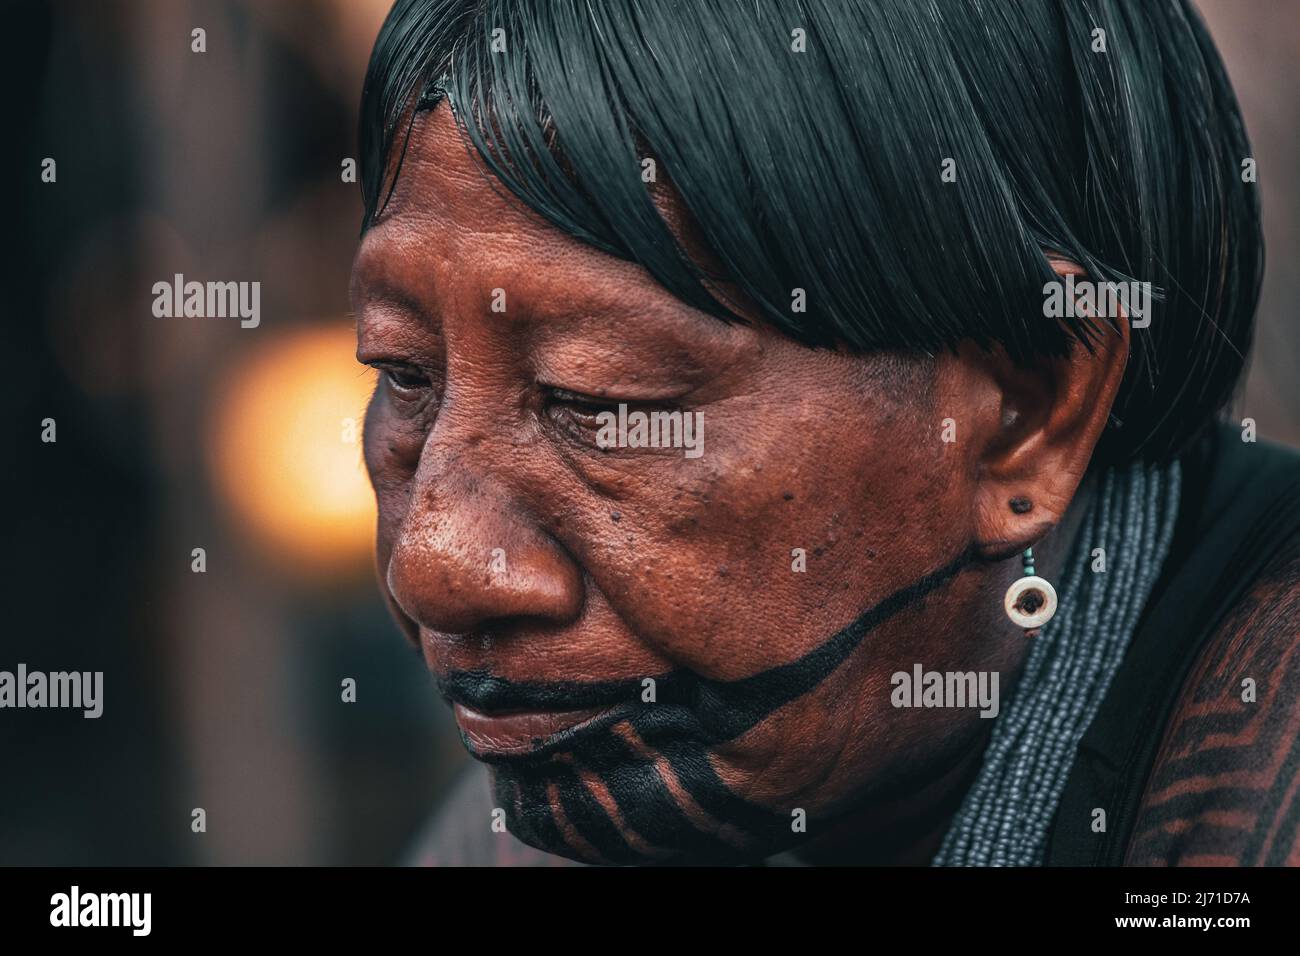 Amazonas Tribe Women Fotos Und Bildmaterial In Hoher Auflösung Alamy 